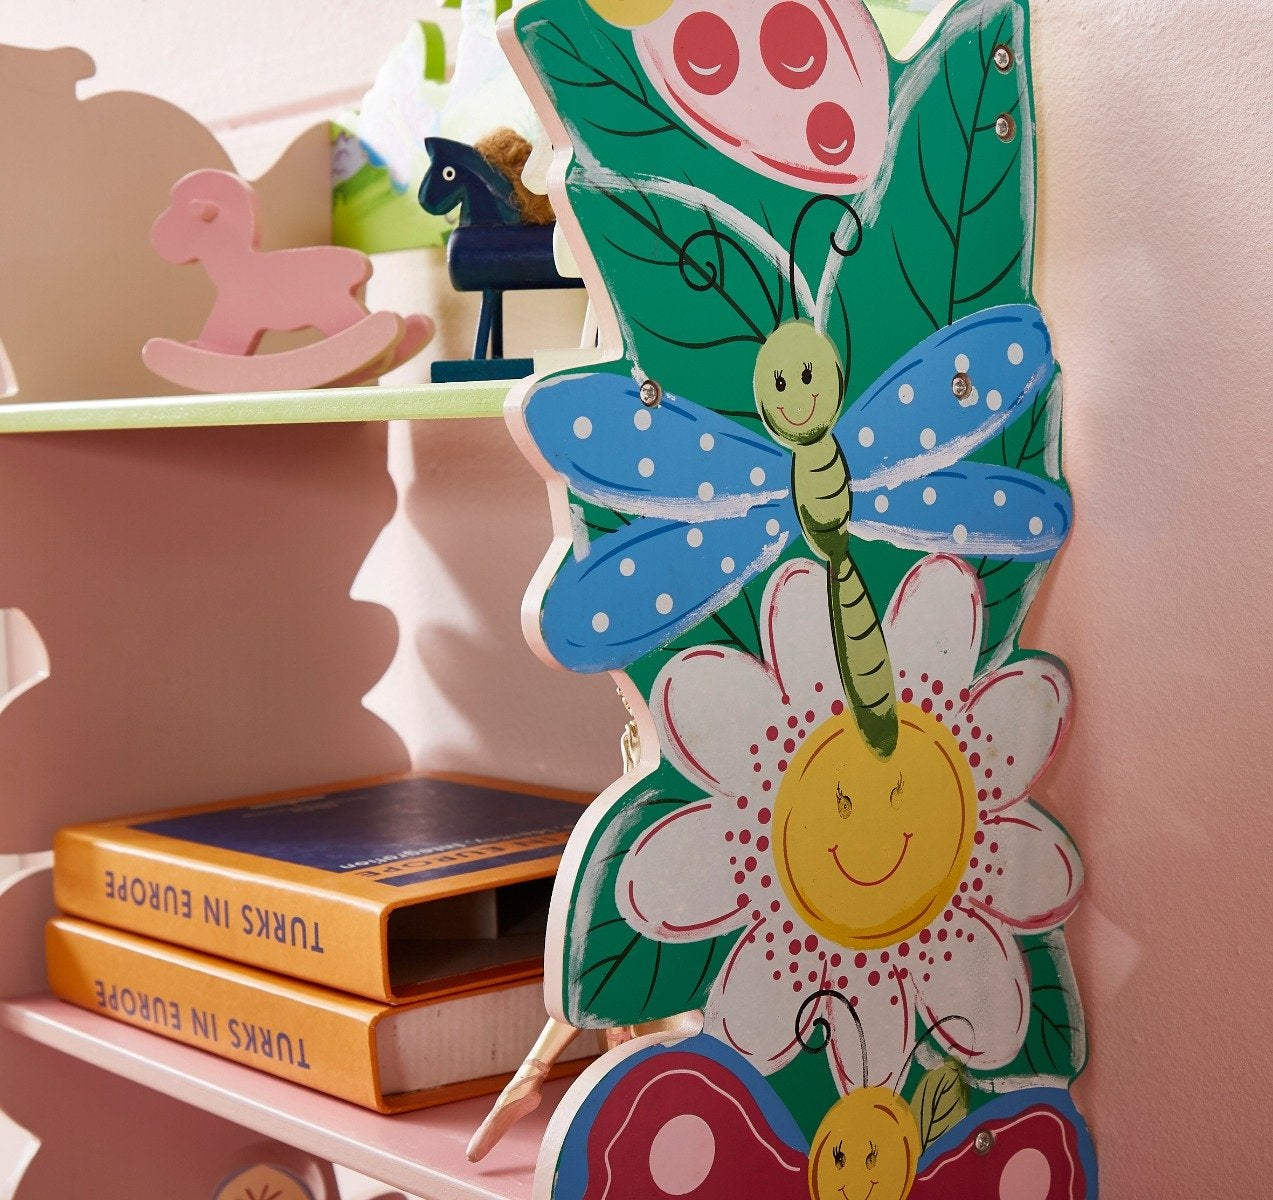 Childrens Painted Bookshelves - Bookshelf with Drawers, Goodies N Stuff